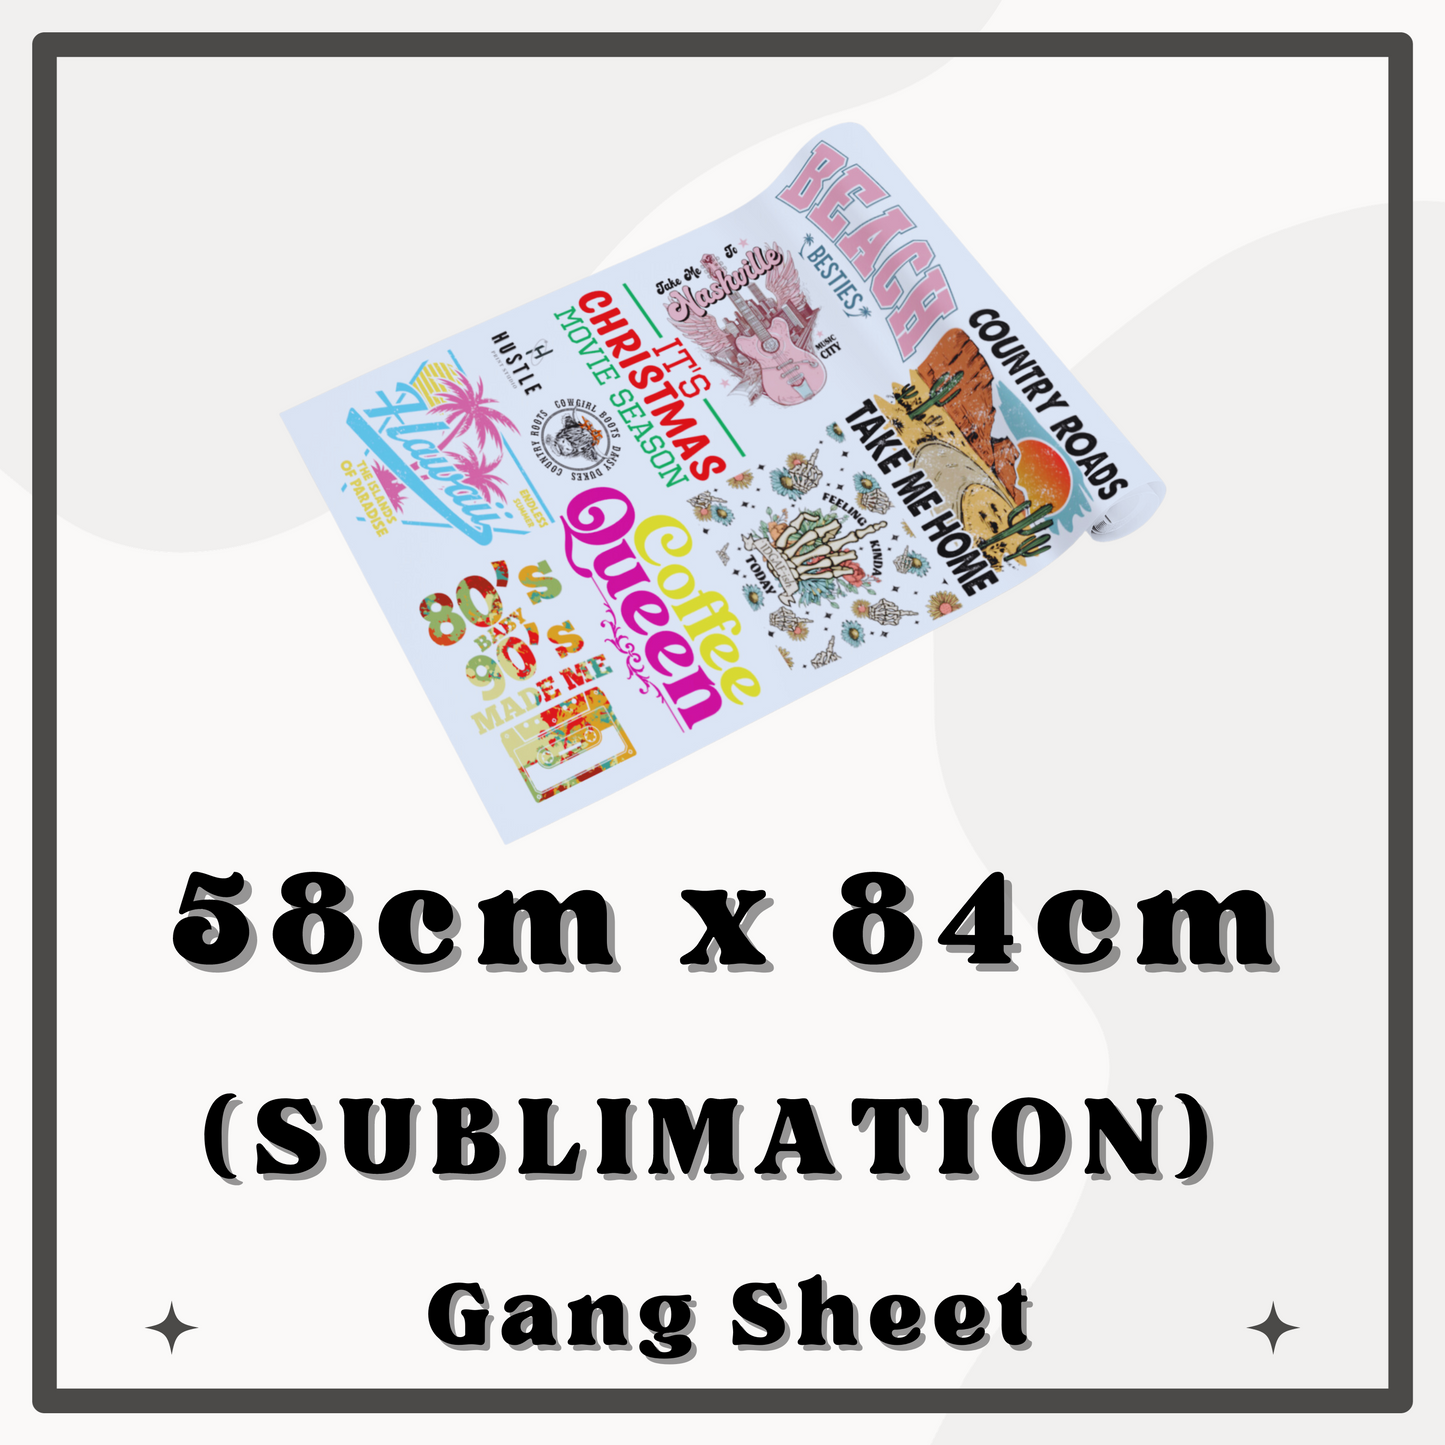 58cm x 84cm Sublimation Gang Sheet